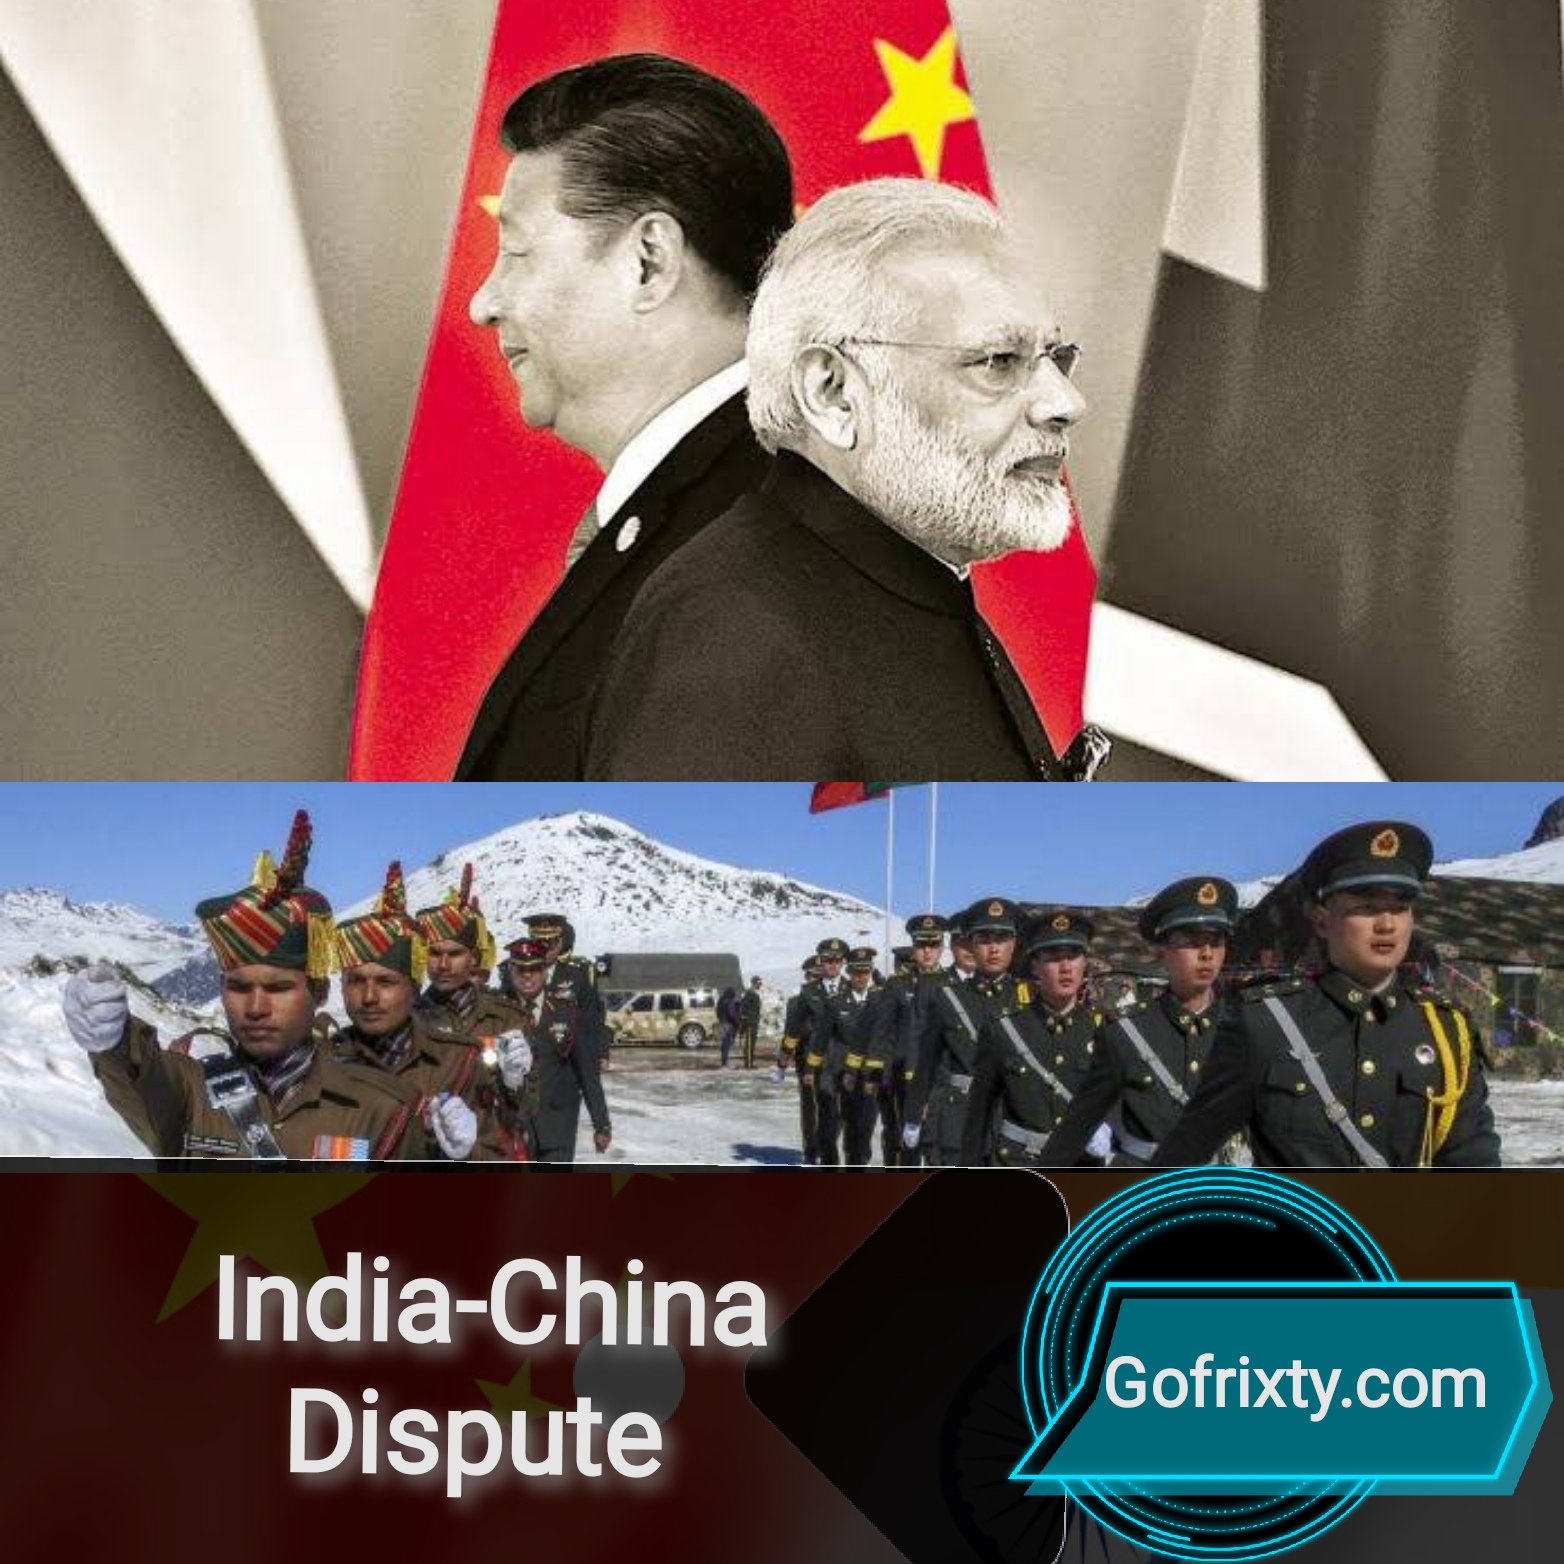 India-China dispute and regional peace